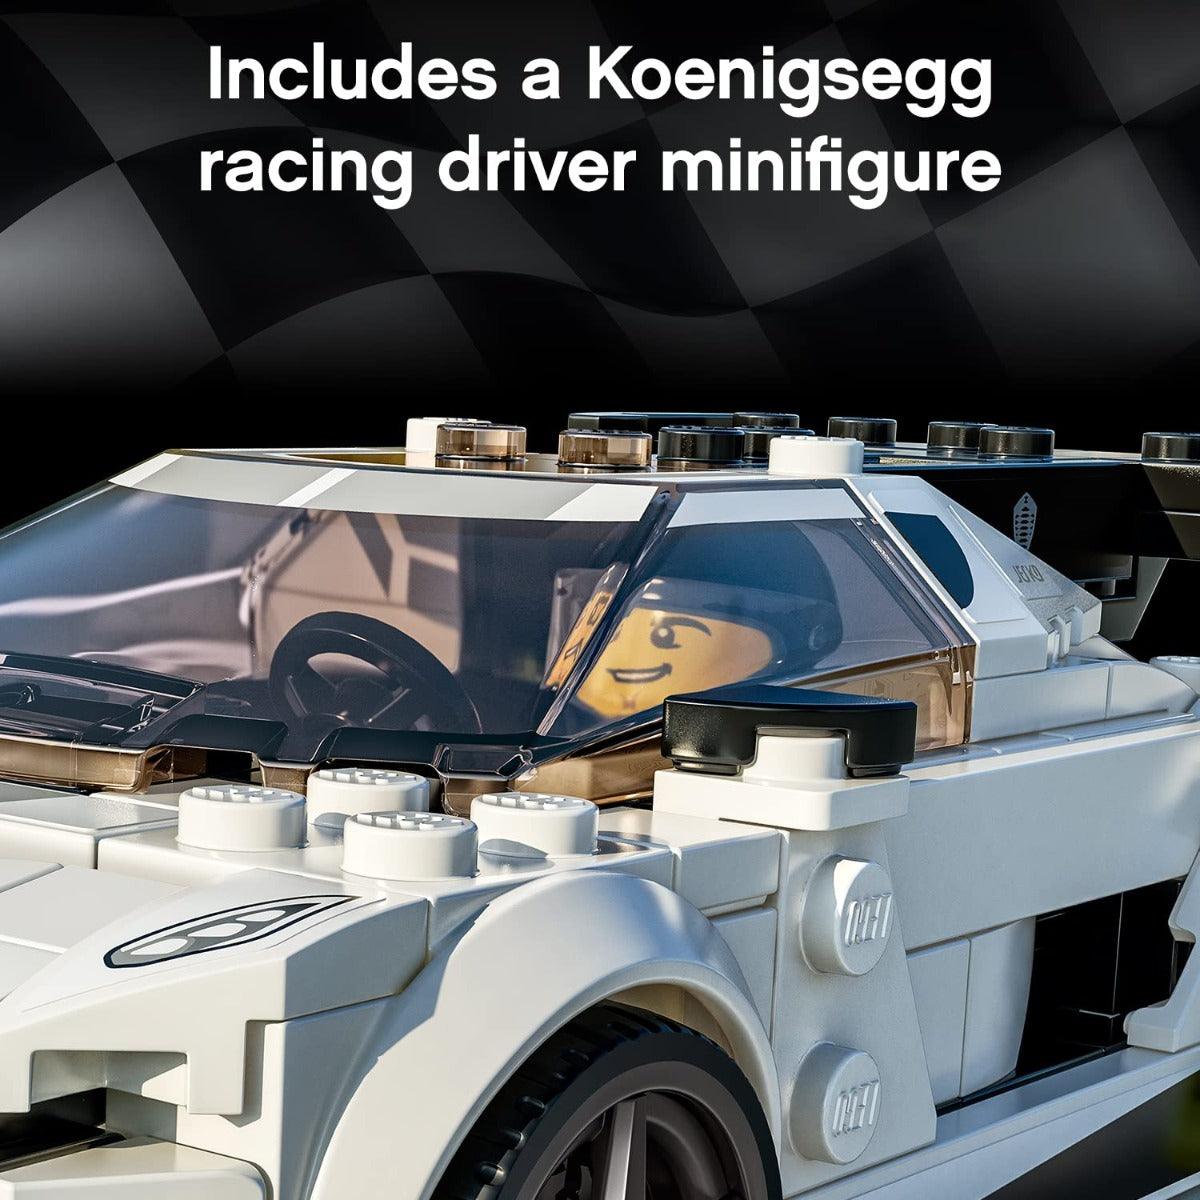 LEGO Speed Champions Koenigsegg Jesko Building Kit for Ages 7+